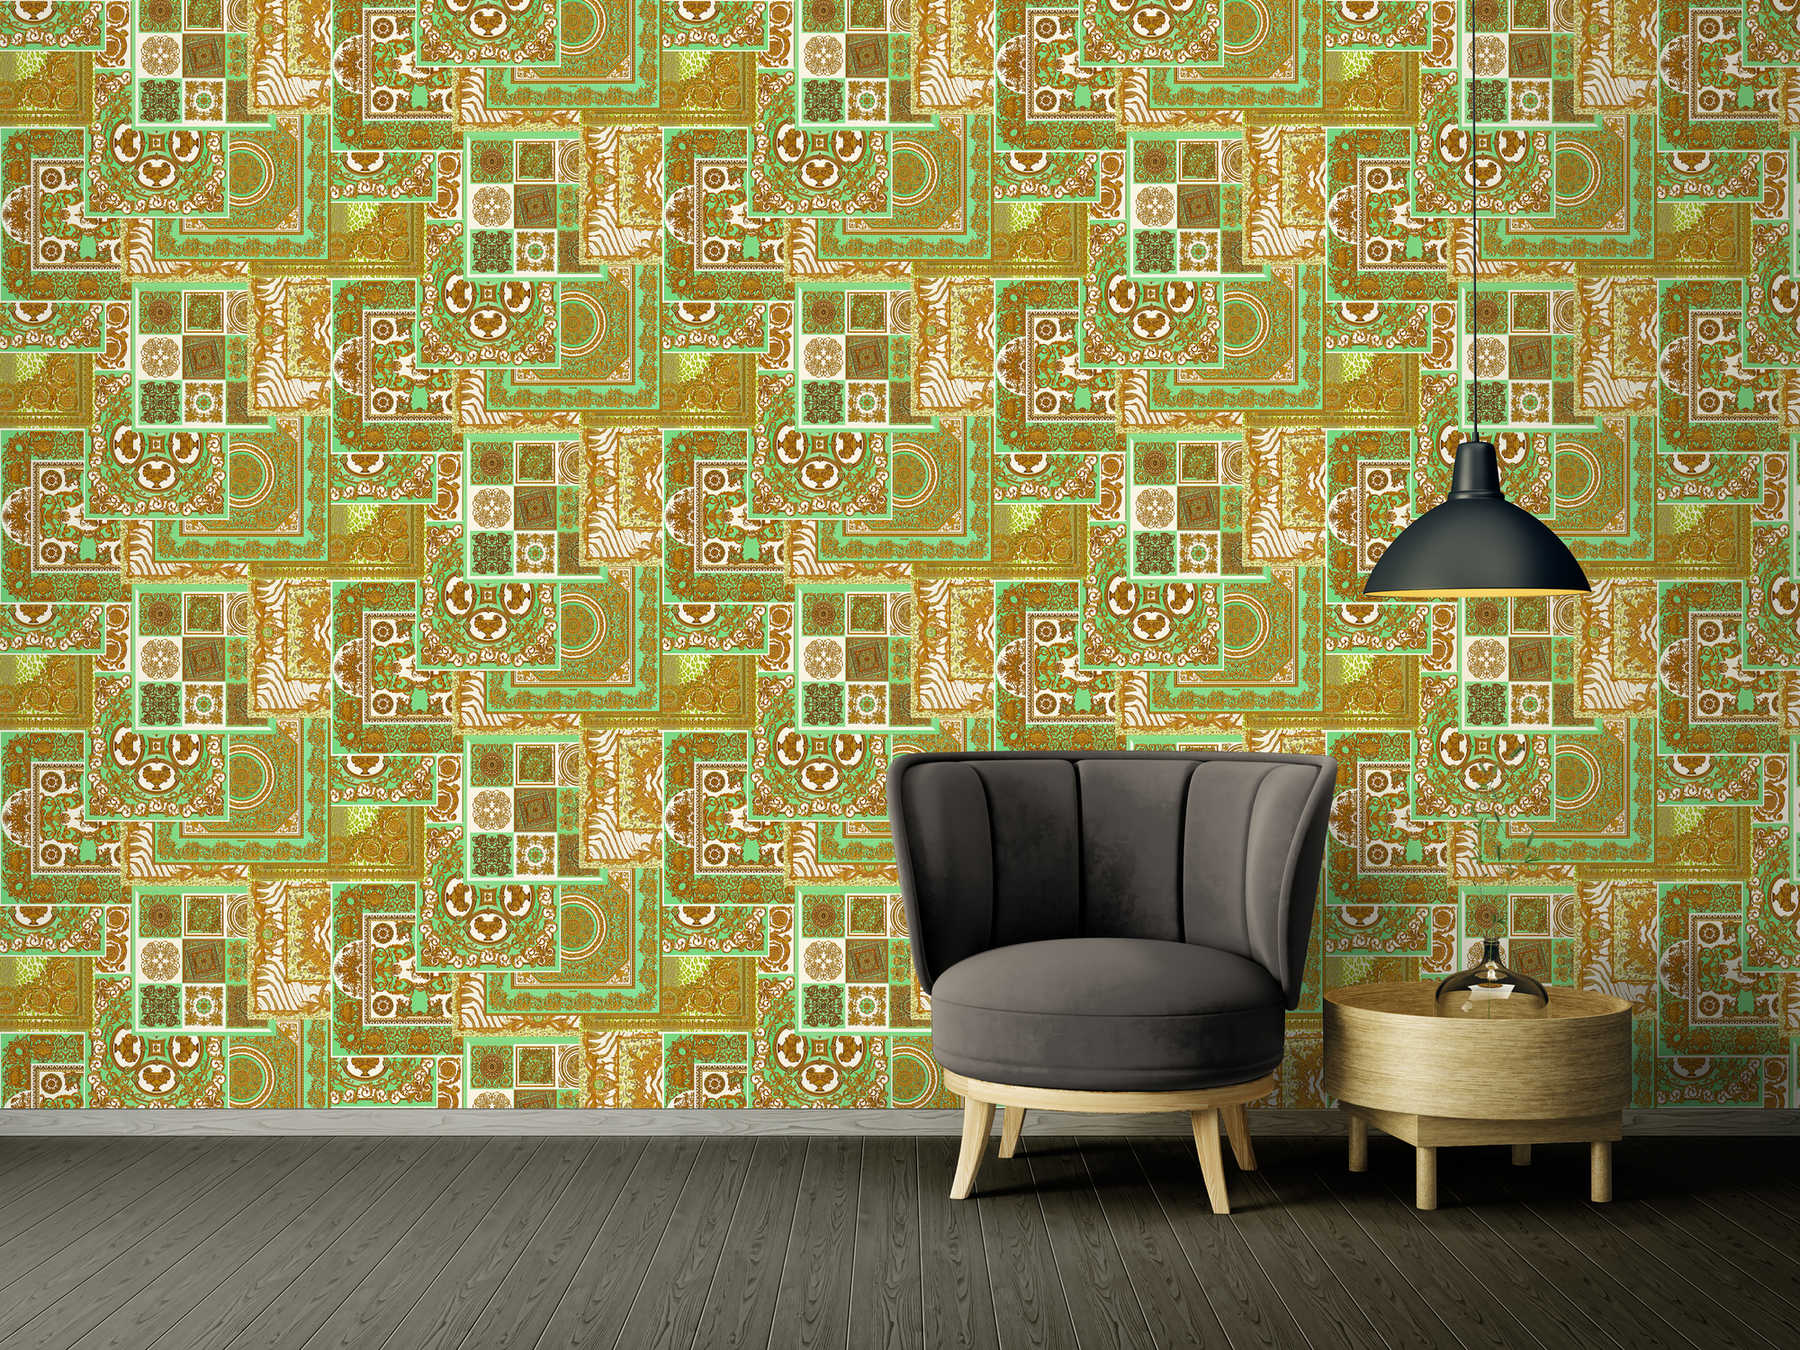             VERSACE Home wallpaper baroque details & animal print - gold, green, brown
        